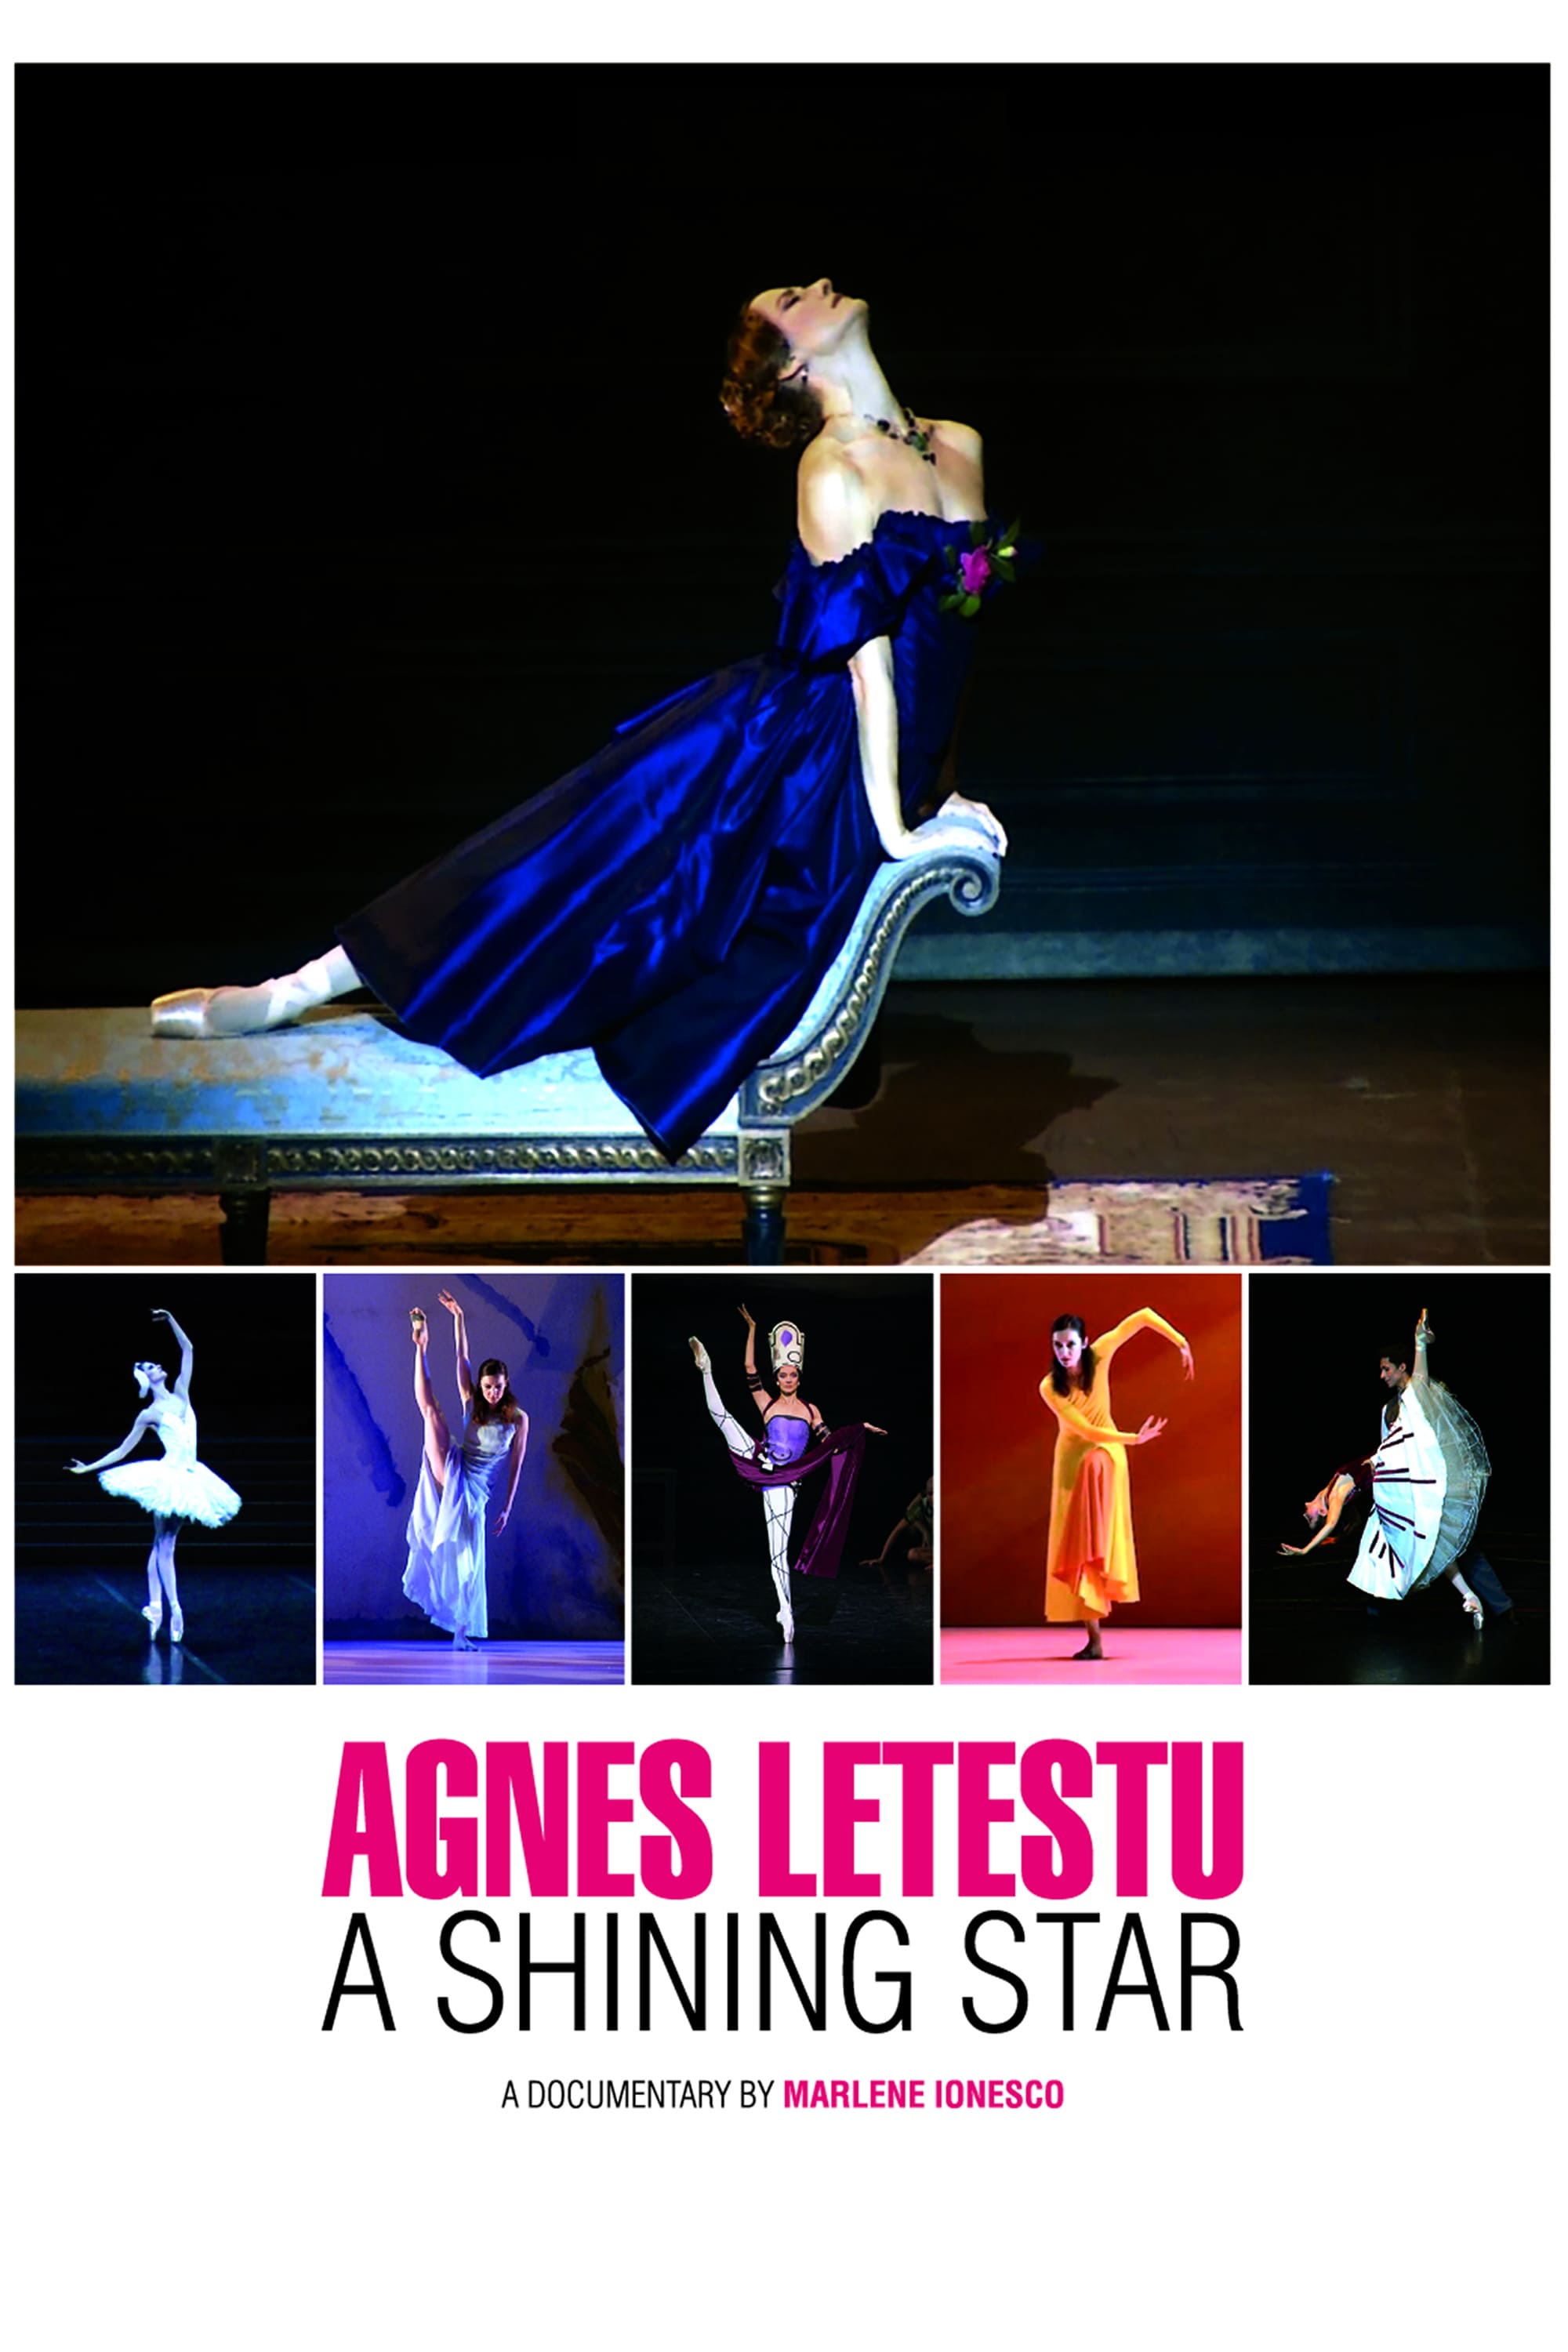 Agnès Letestu: A Shining Star